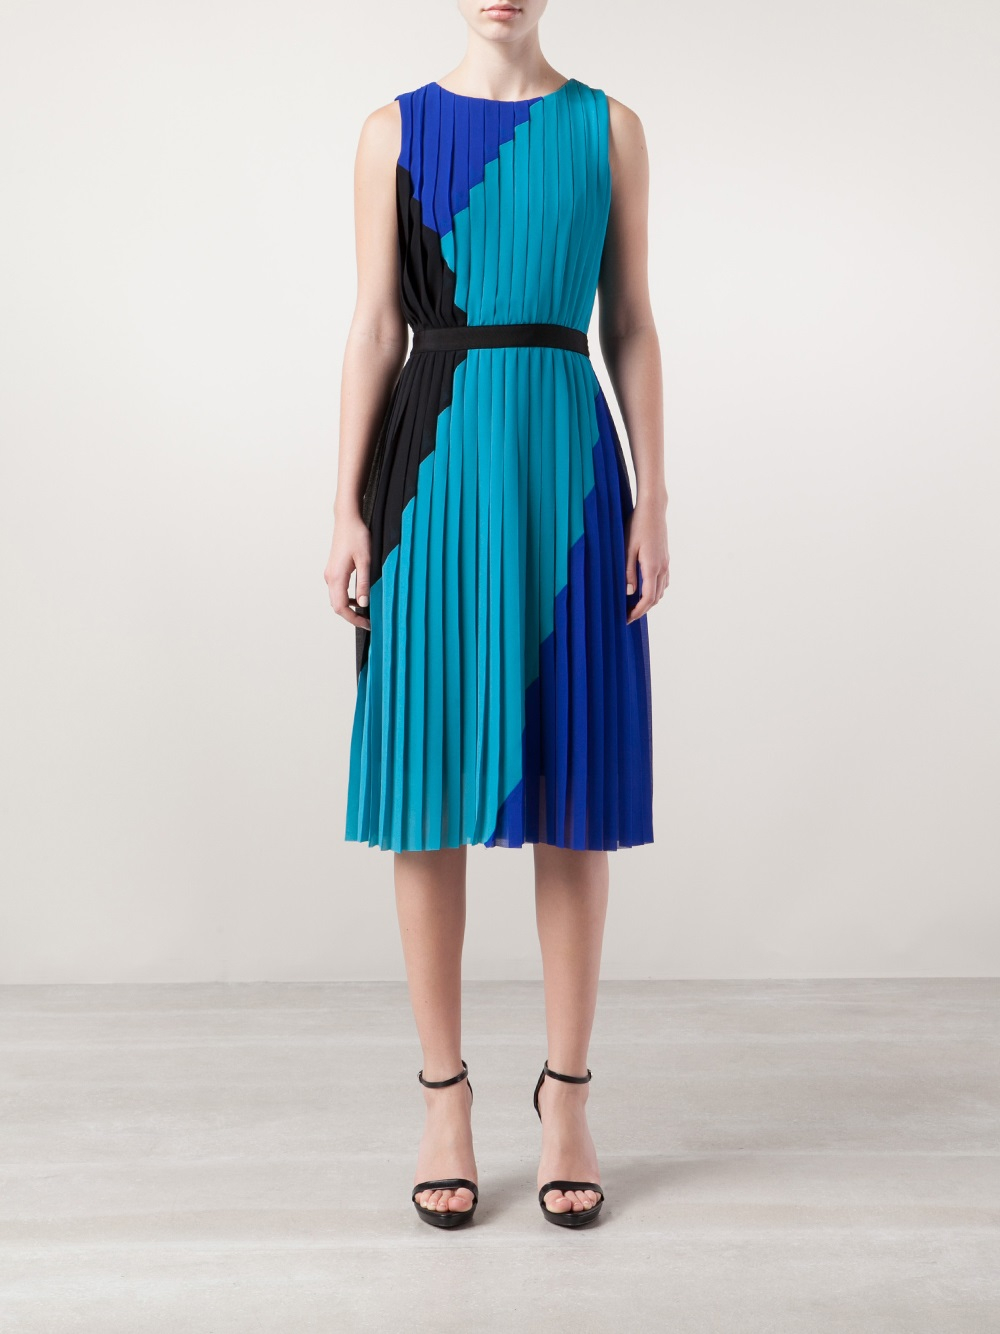 Paul smith black label Pleated Dress in Blue | Lyst